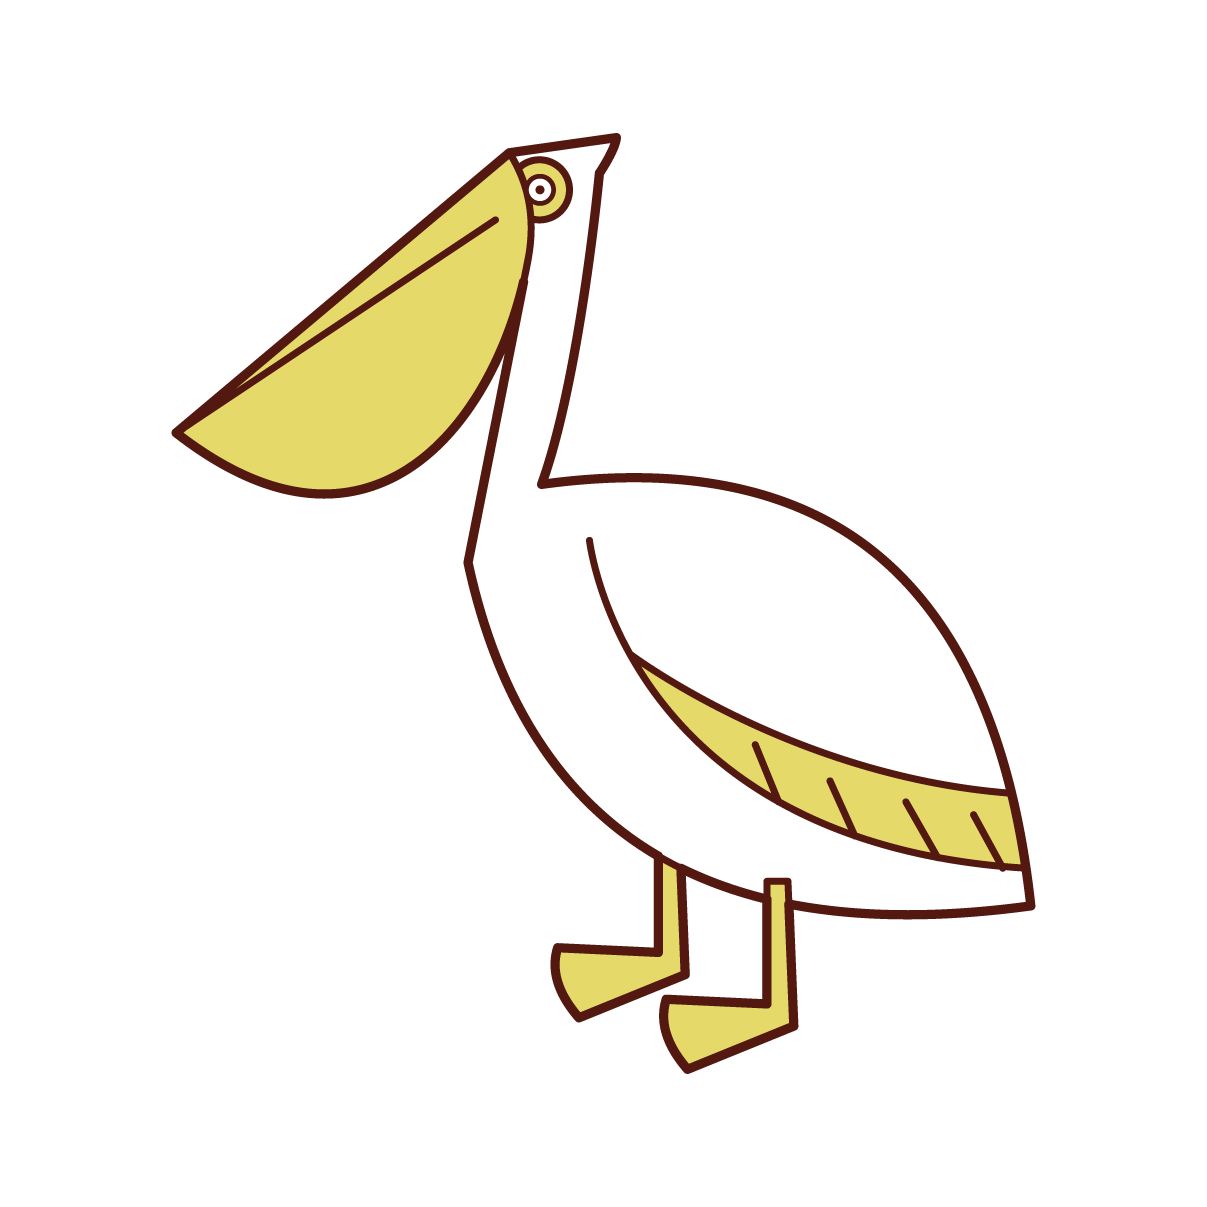 Pelican Illustration